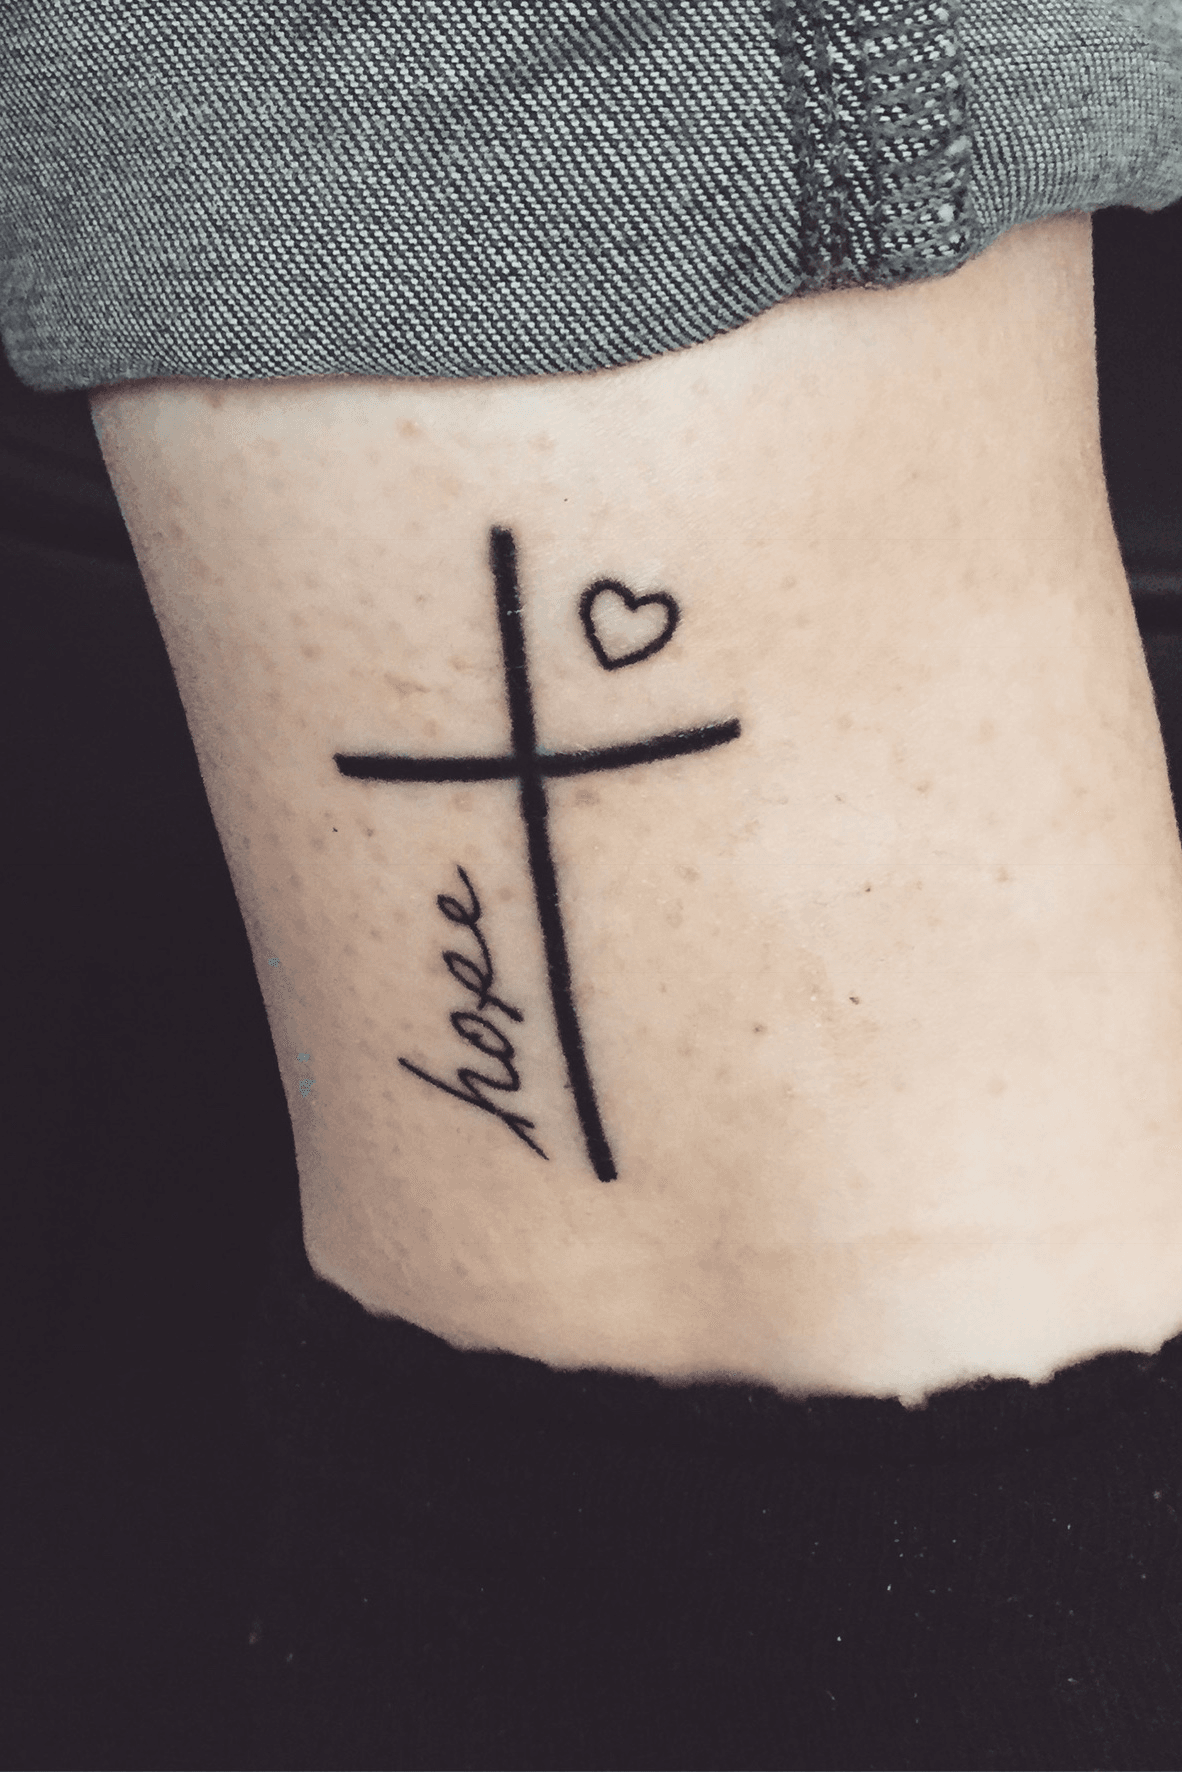 faith hope and love symbol tattoos on foot